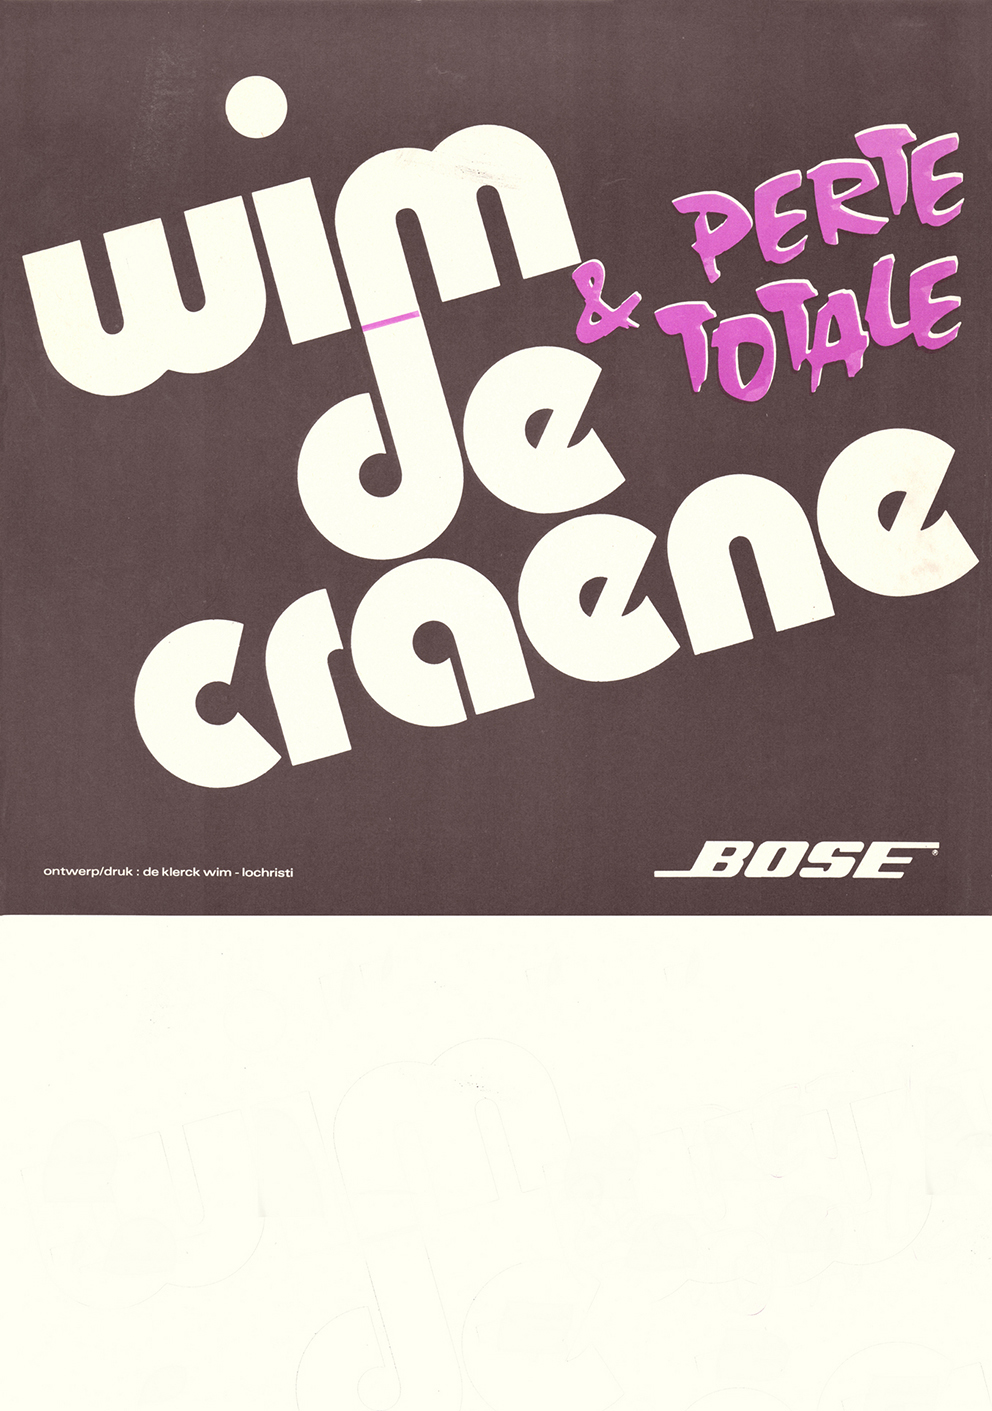 1981 concertaffiche Wim De Craene en  Groep Perte Totale 